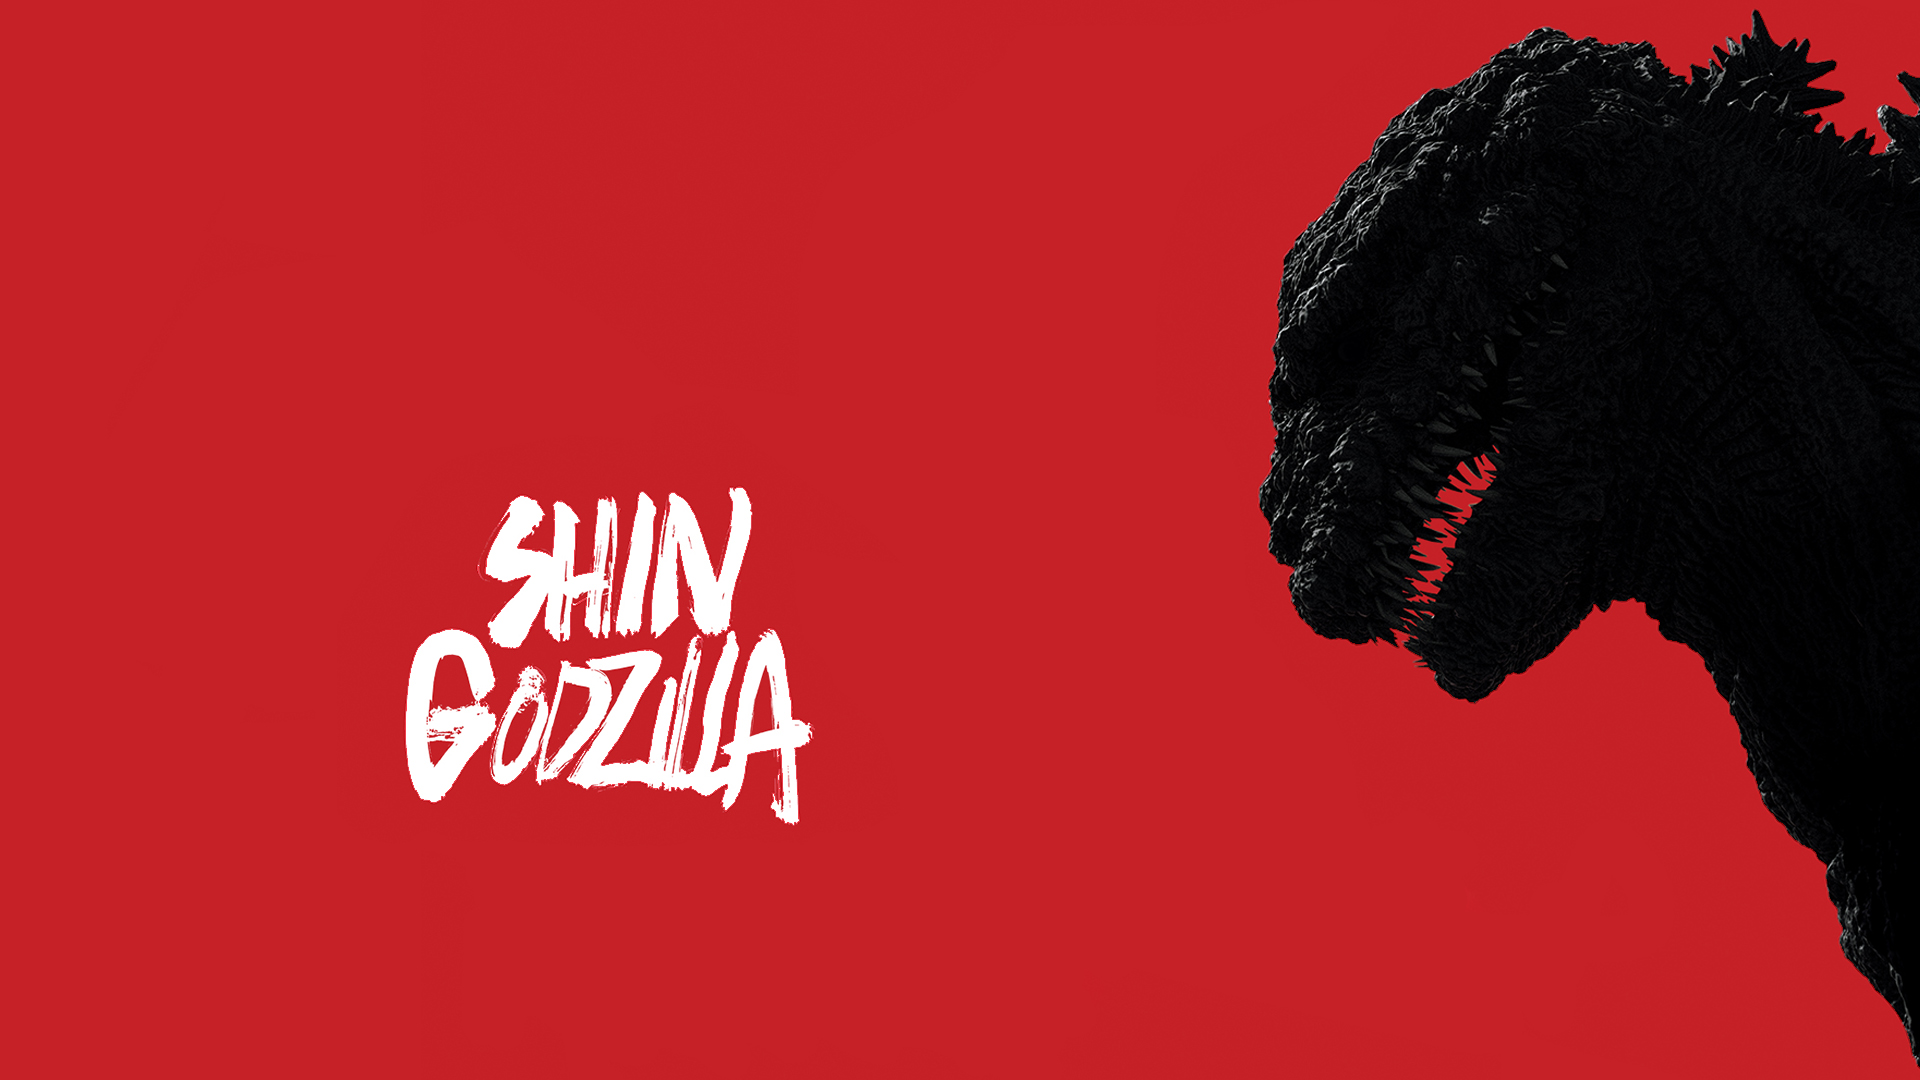 General 1920x1080 Shin Godzilla  movies creature Godzilla red background kaiju simple background digital art